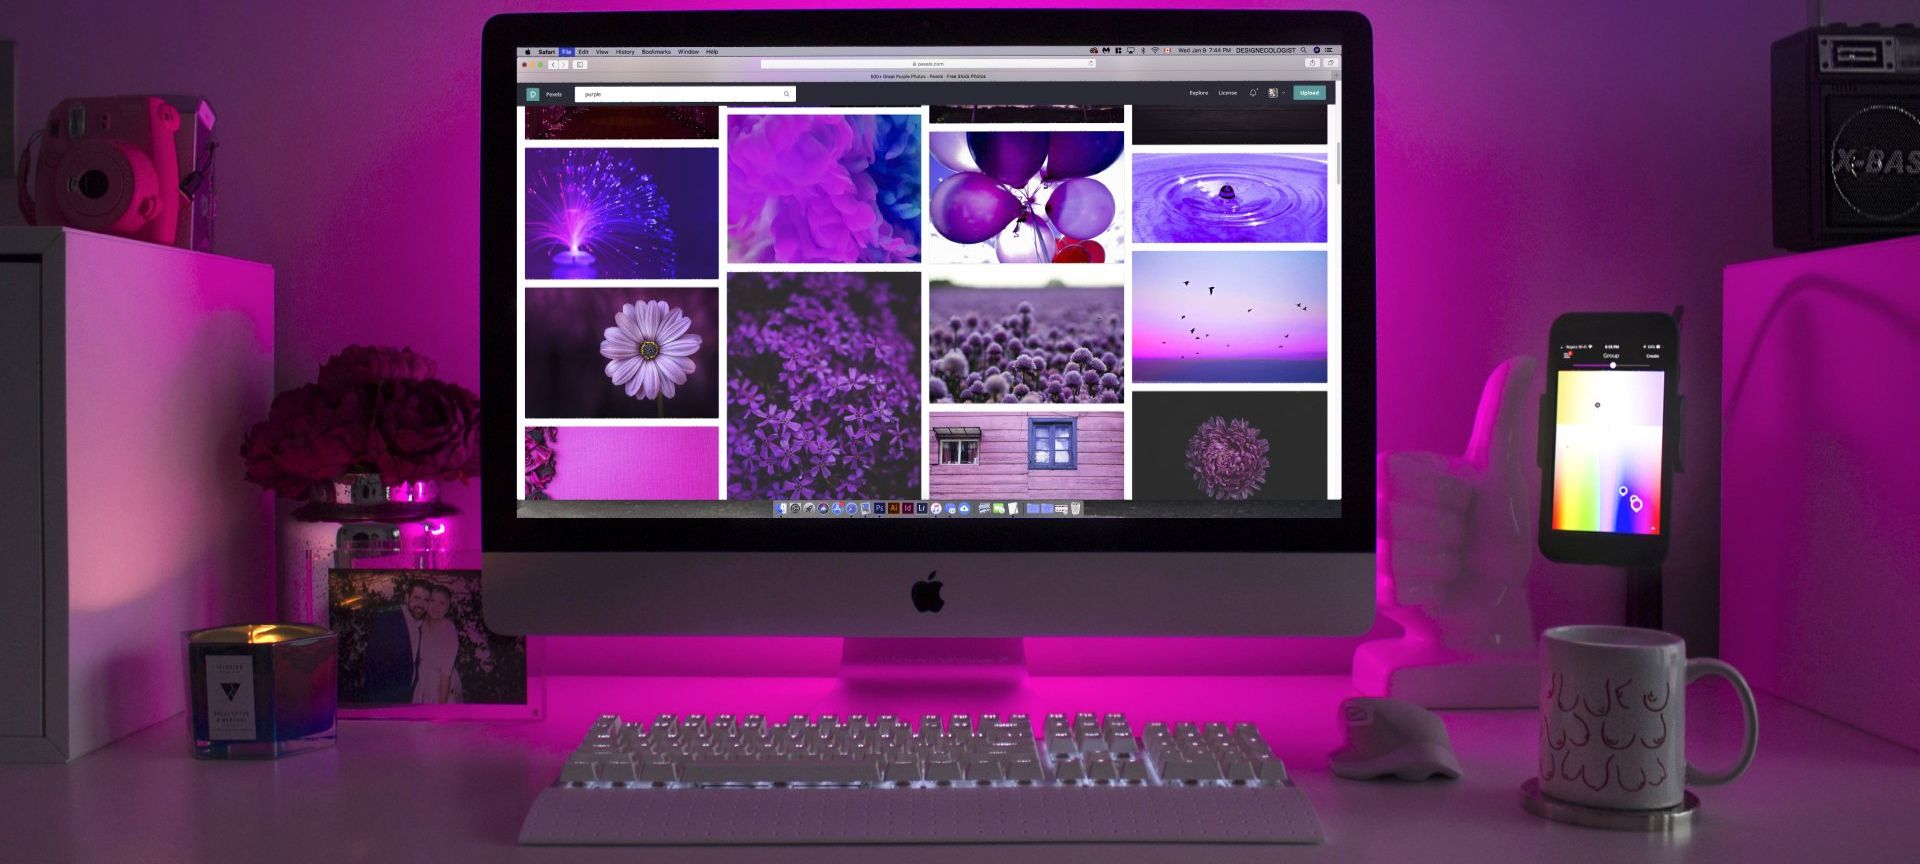 pink computer setup with pink rgb lights